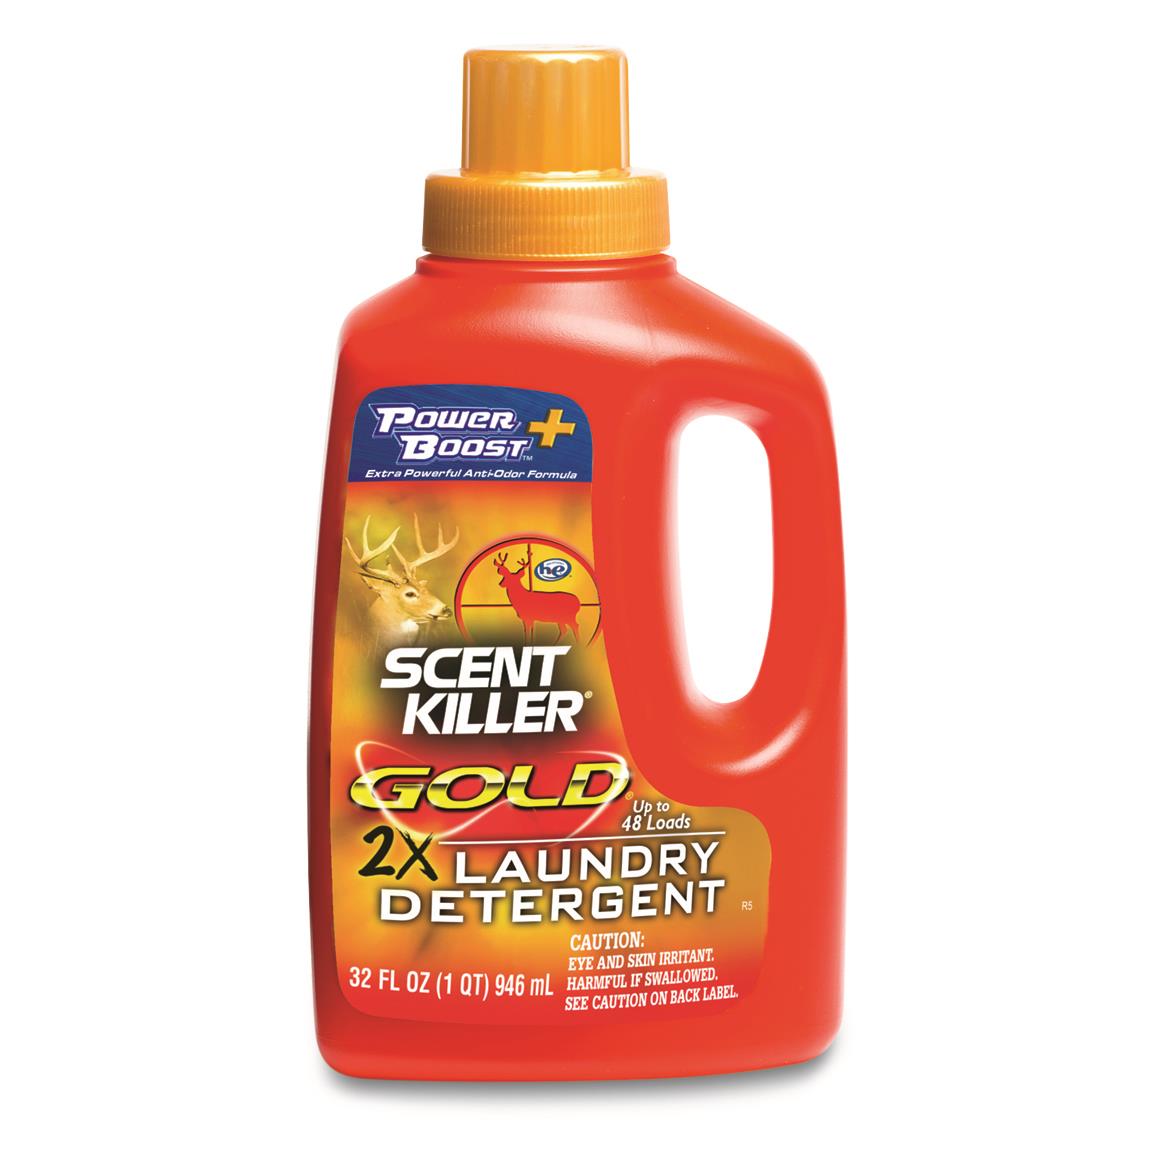 Scent Killer Gold Laundry Detergent